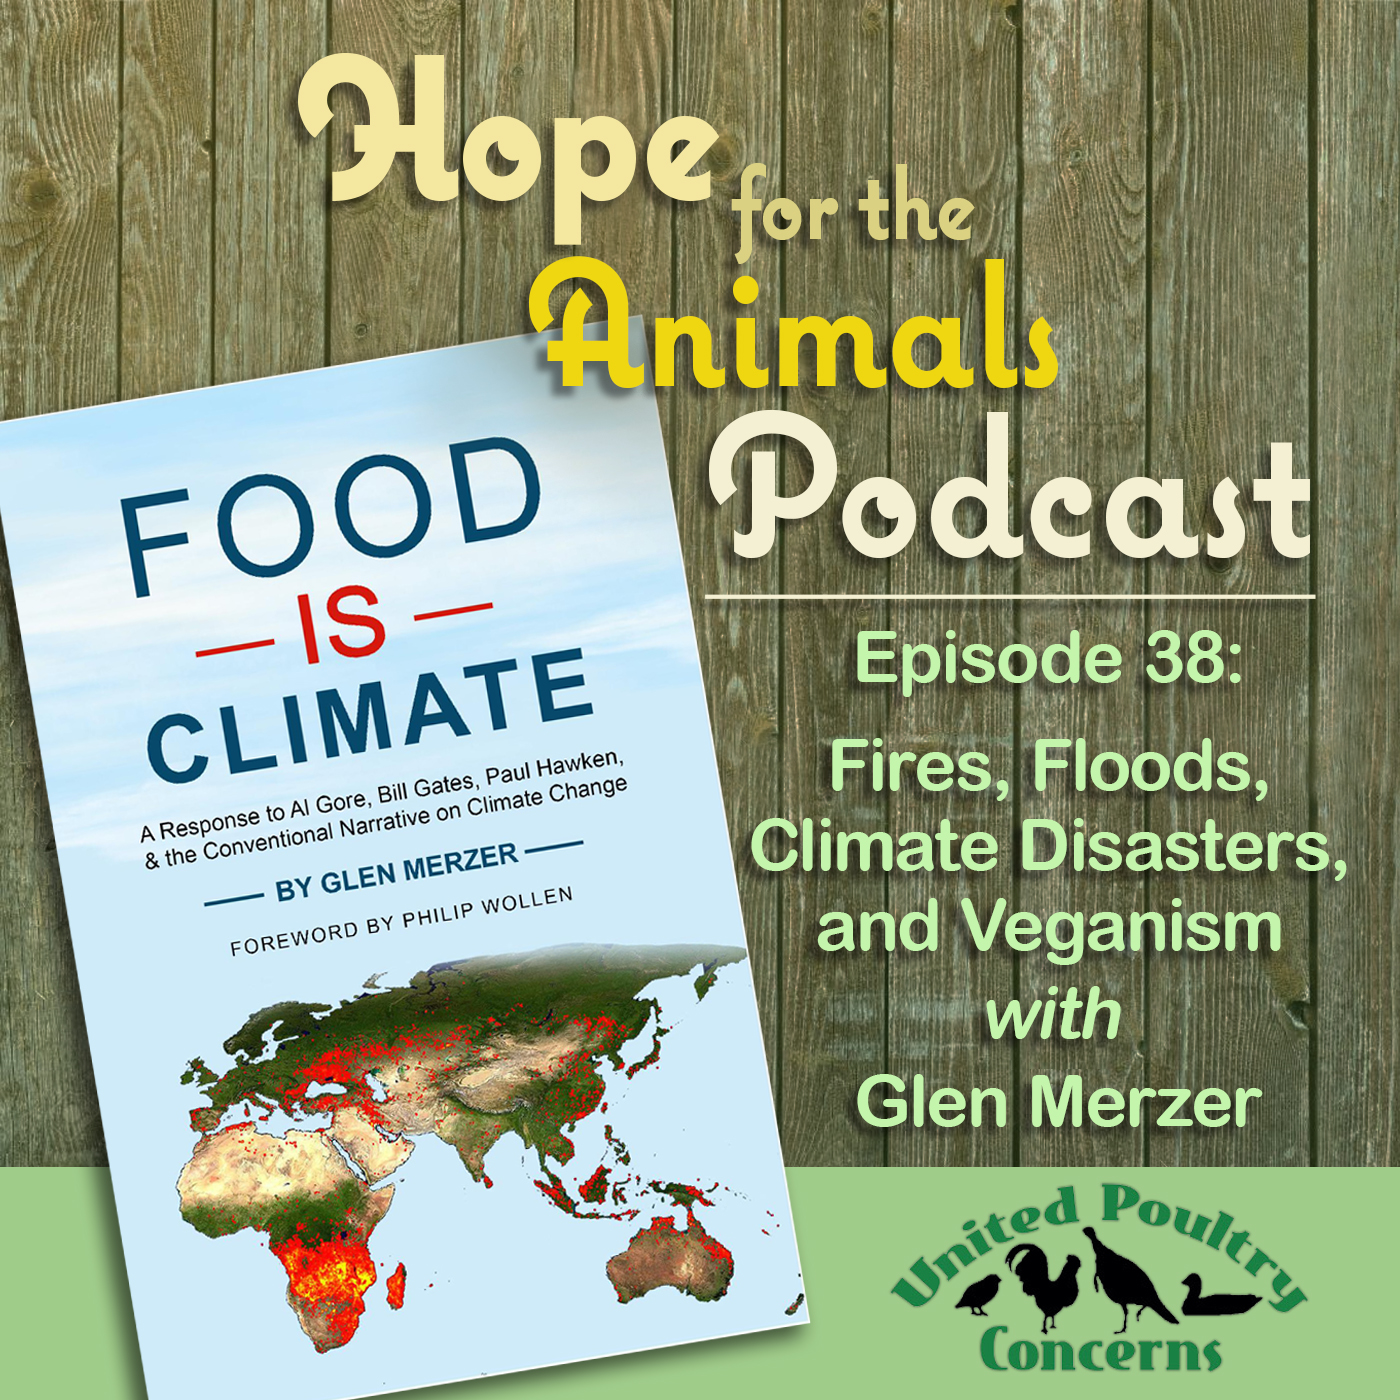 Episode 38: Fires, Floods, Climate Disaster, and Veganism with Glen Merzer